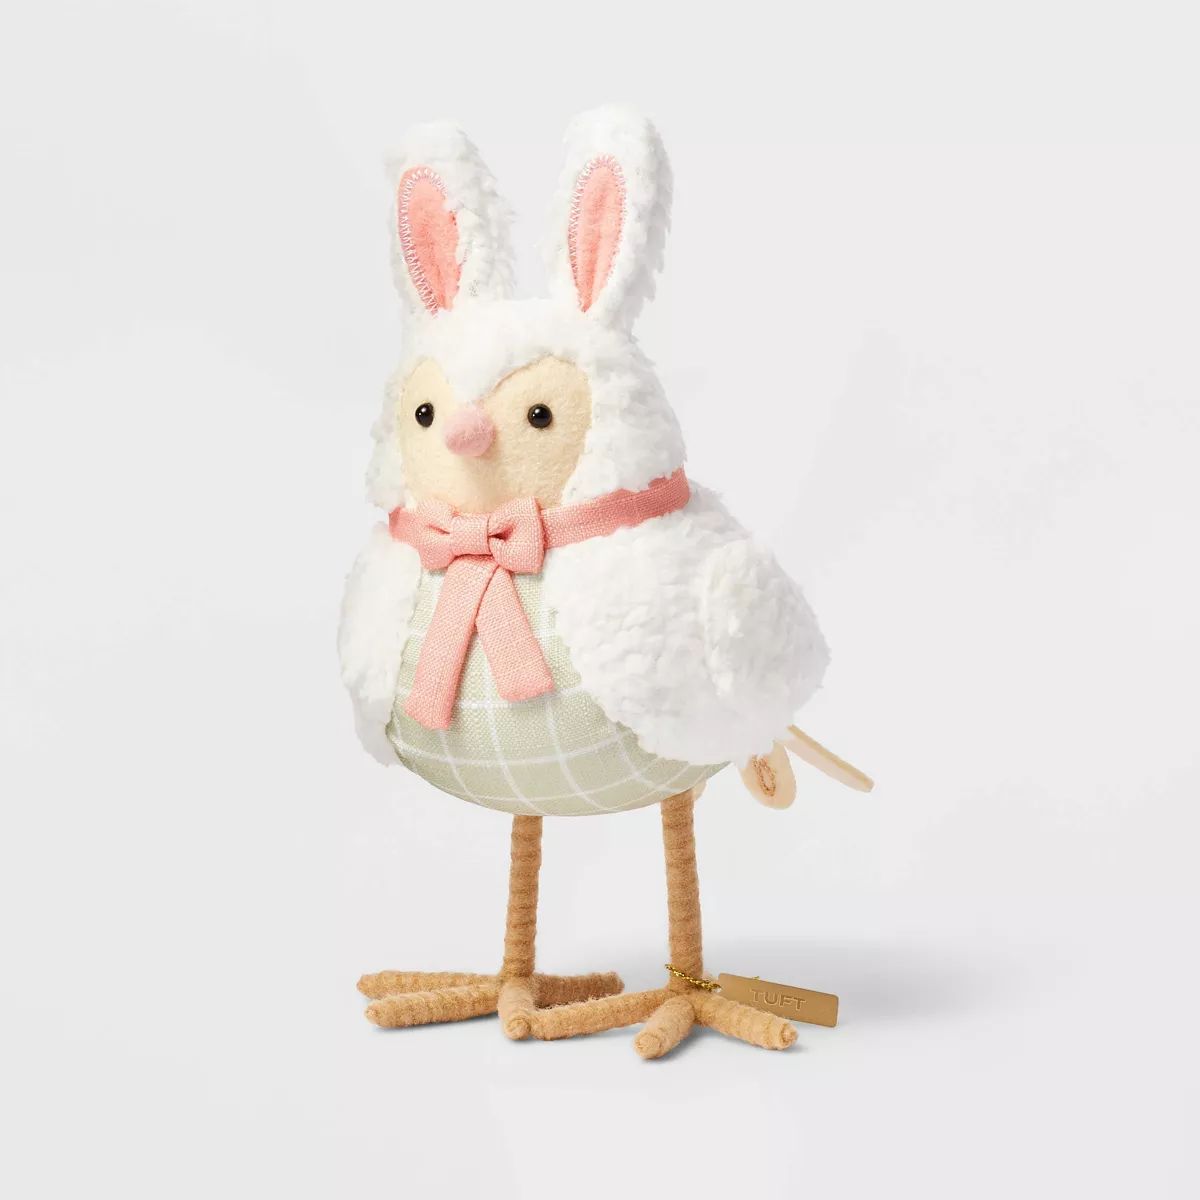 Featherly Friend Easter Fabric Bird Decor Bunny - Spritz™ | Target